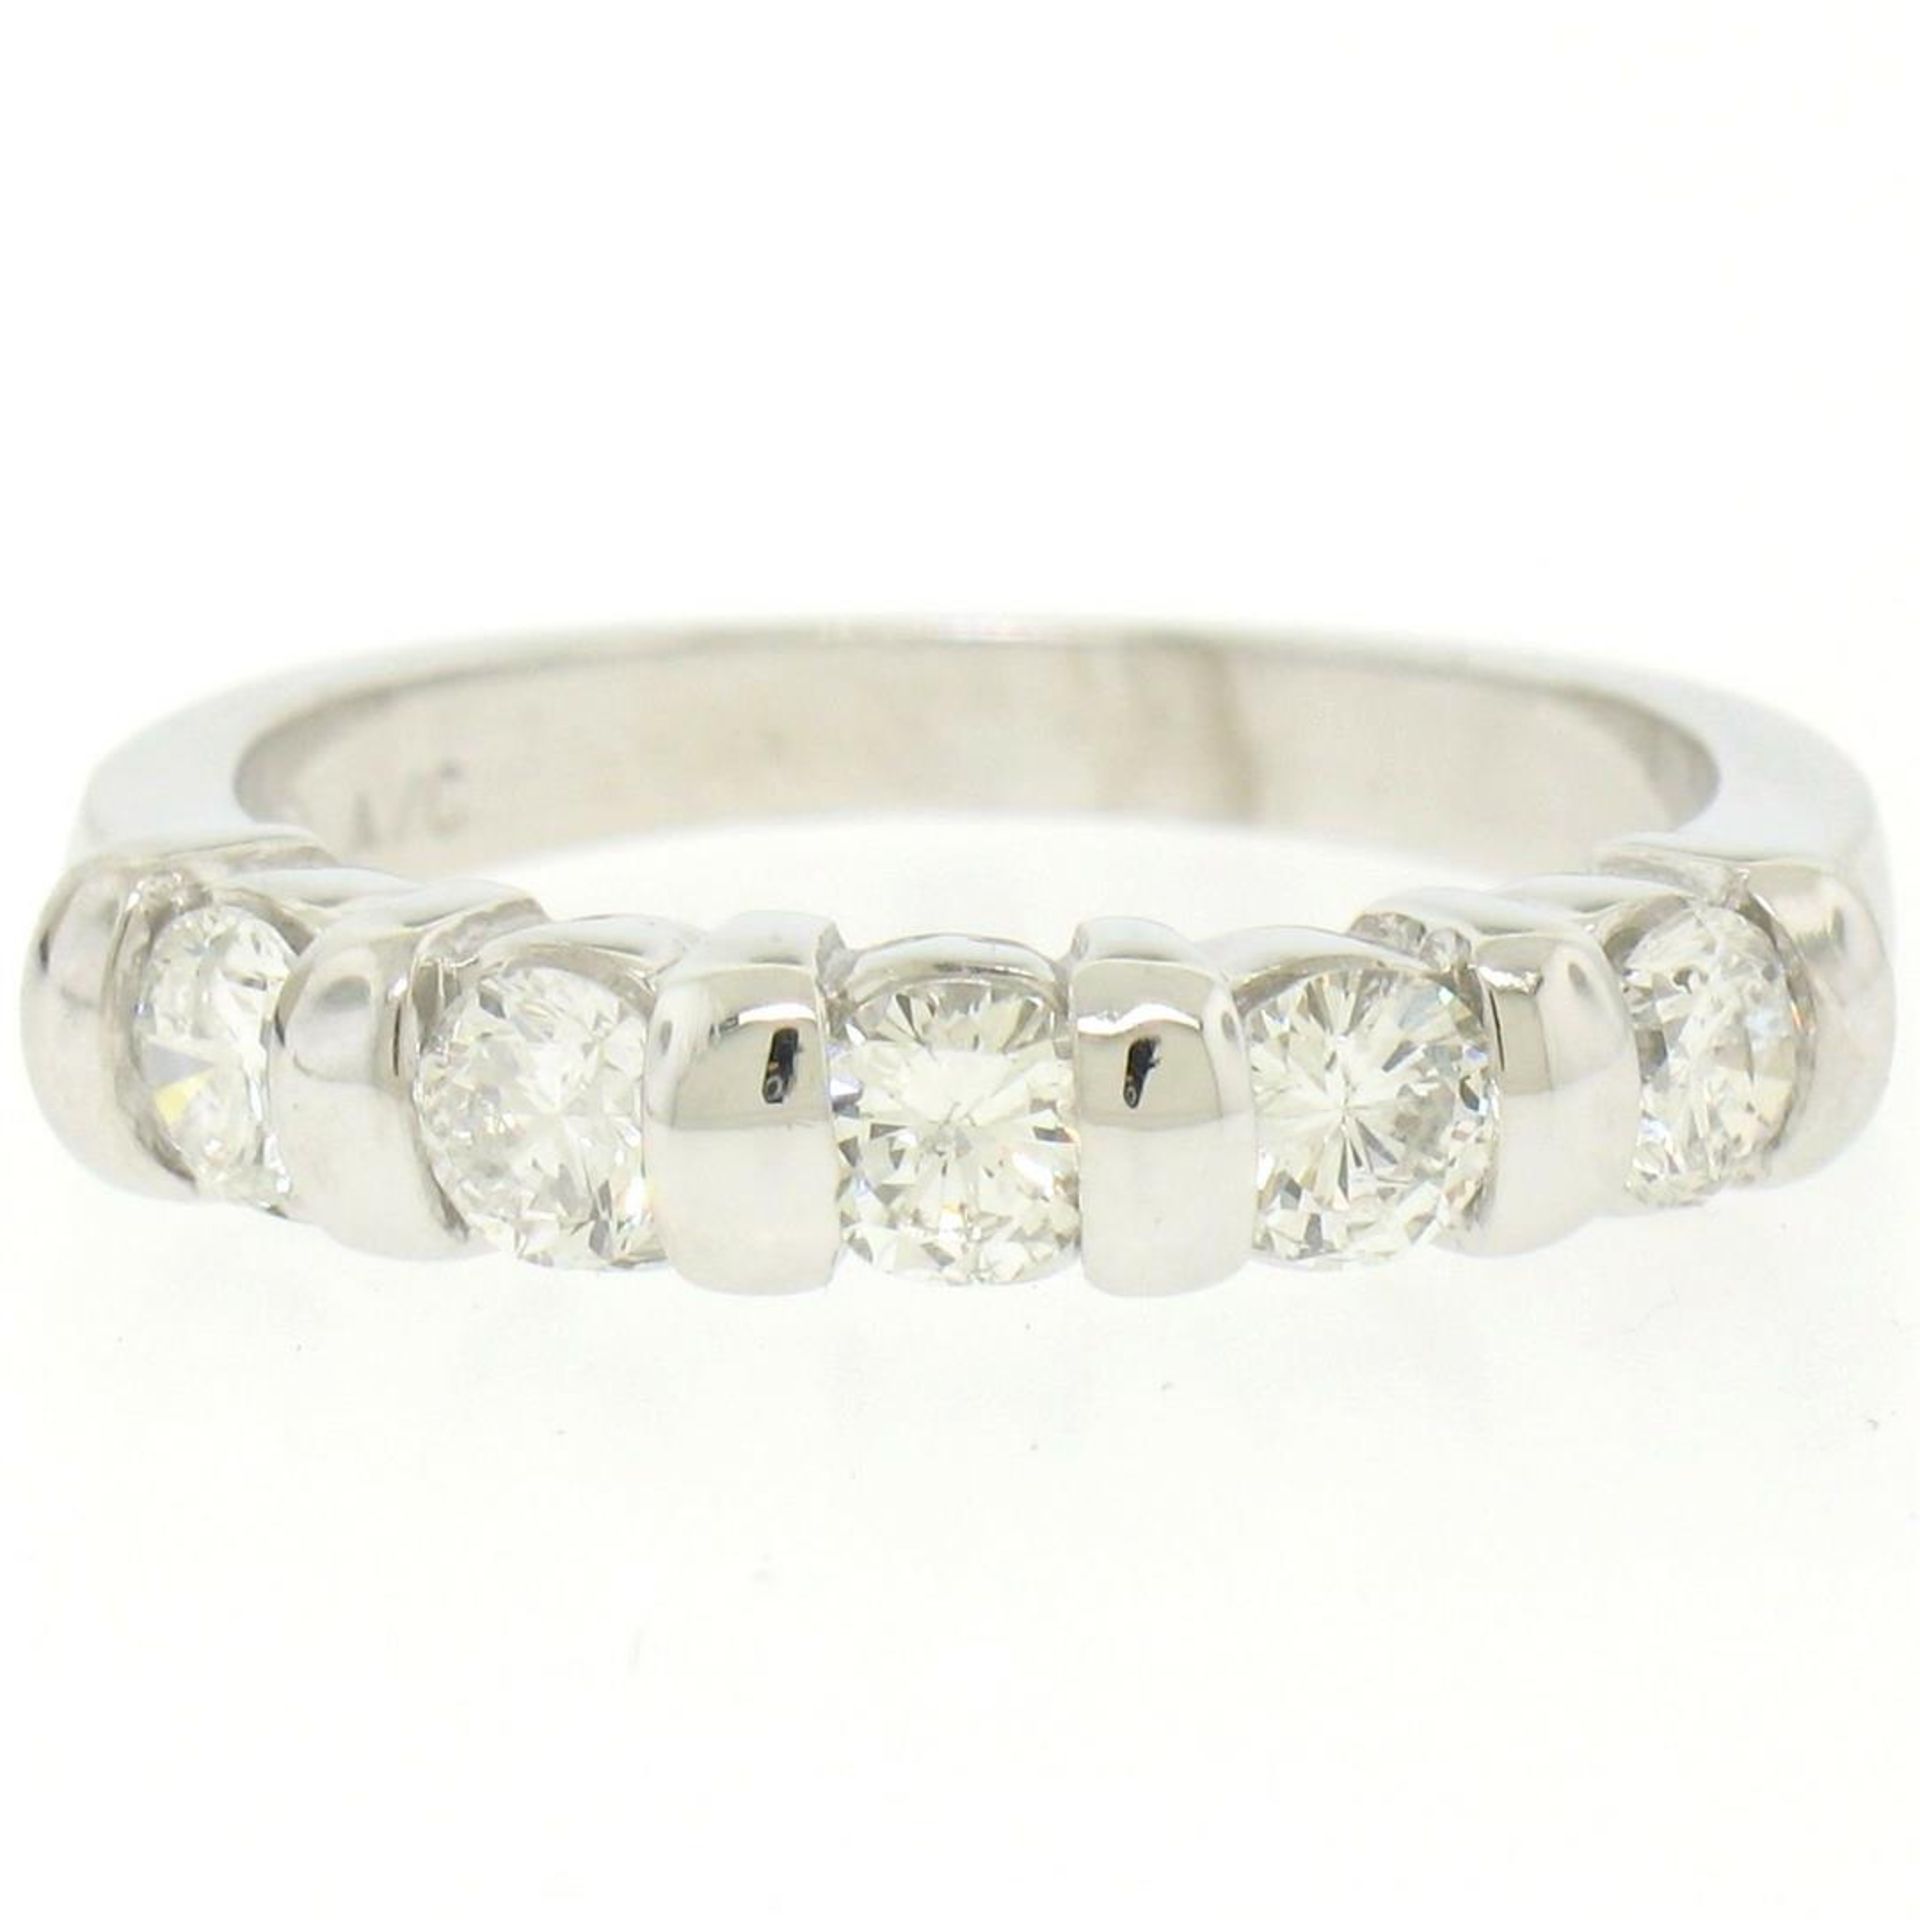 NEW 14k White Gold FINE .80ctw Bar Set Round Brilliant Diamond Wedding Band Ring - Image 3 of 9